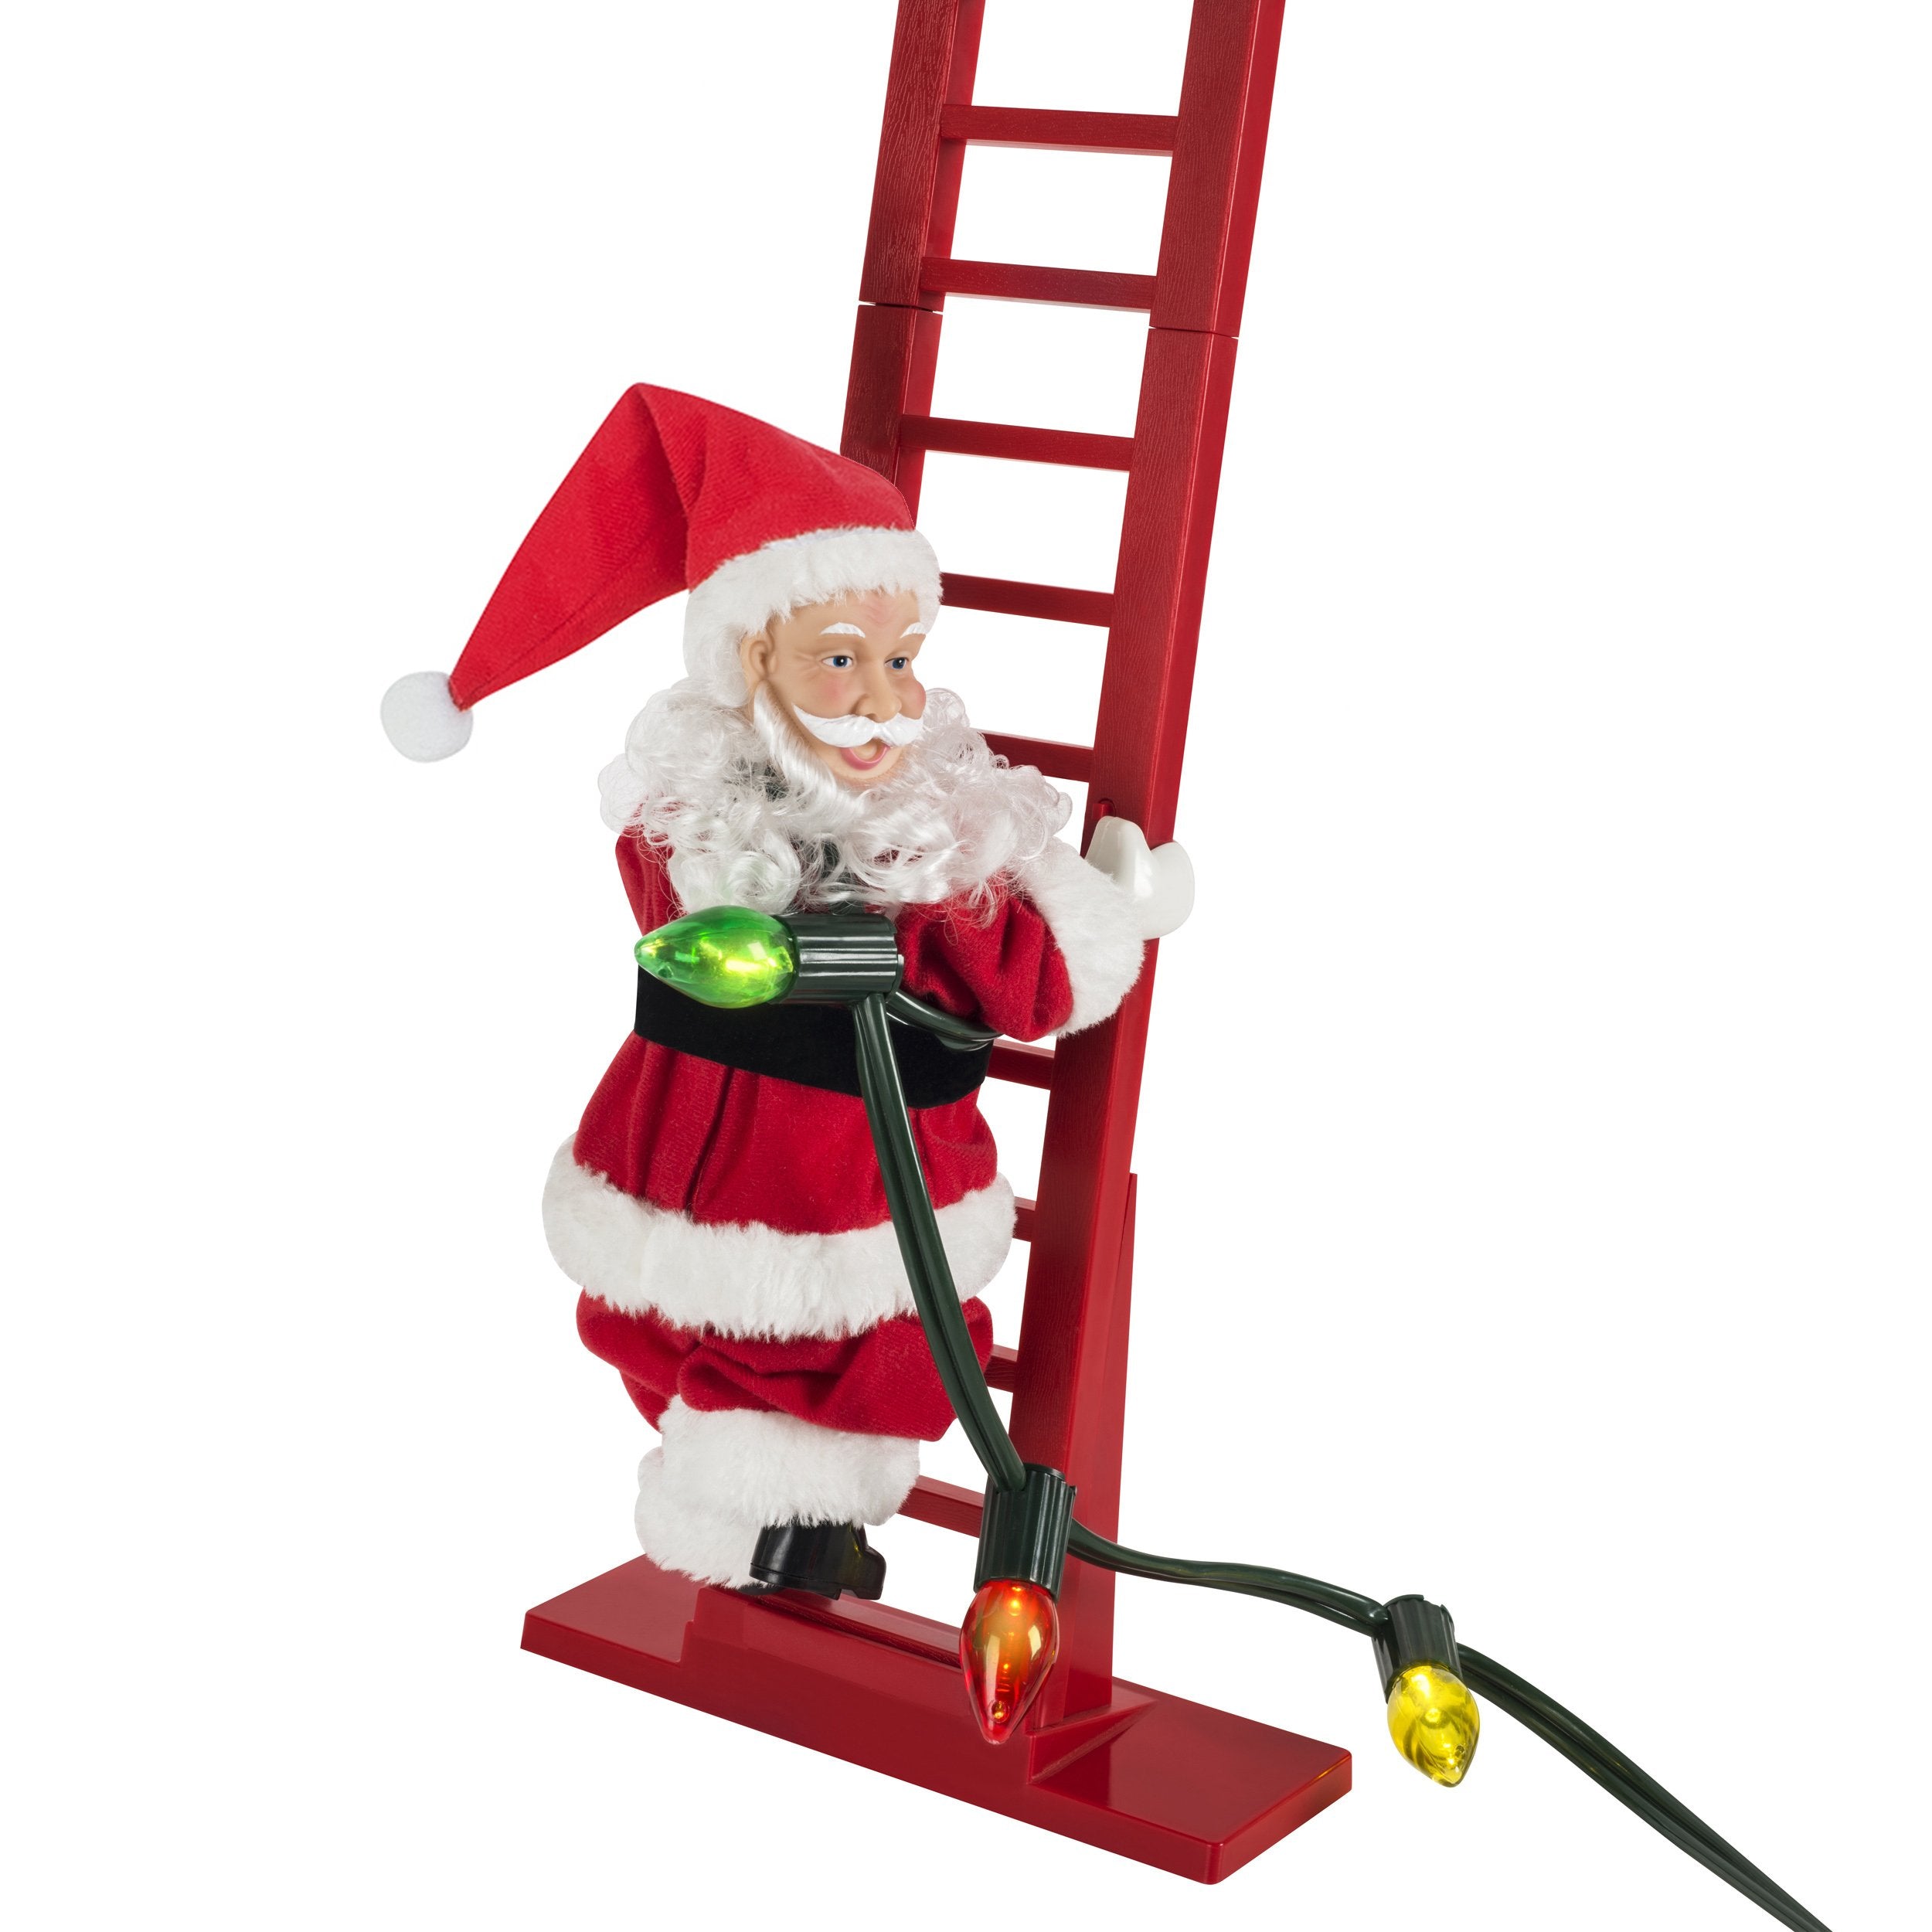 Mr. Christmas Super Climbing Santa